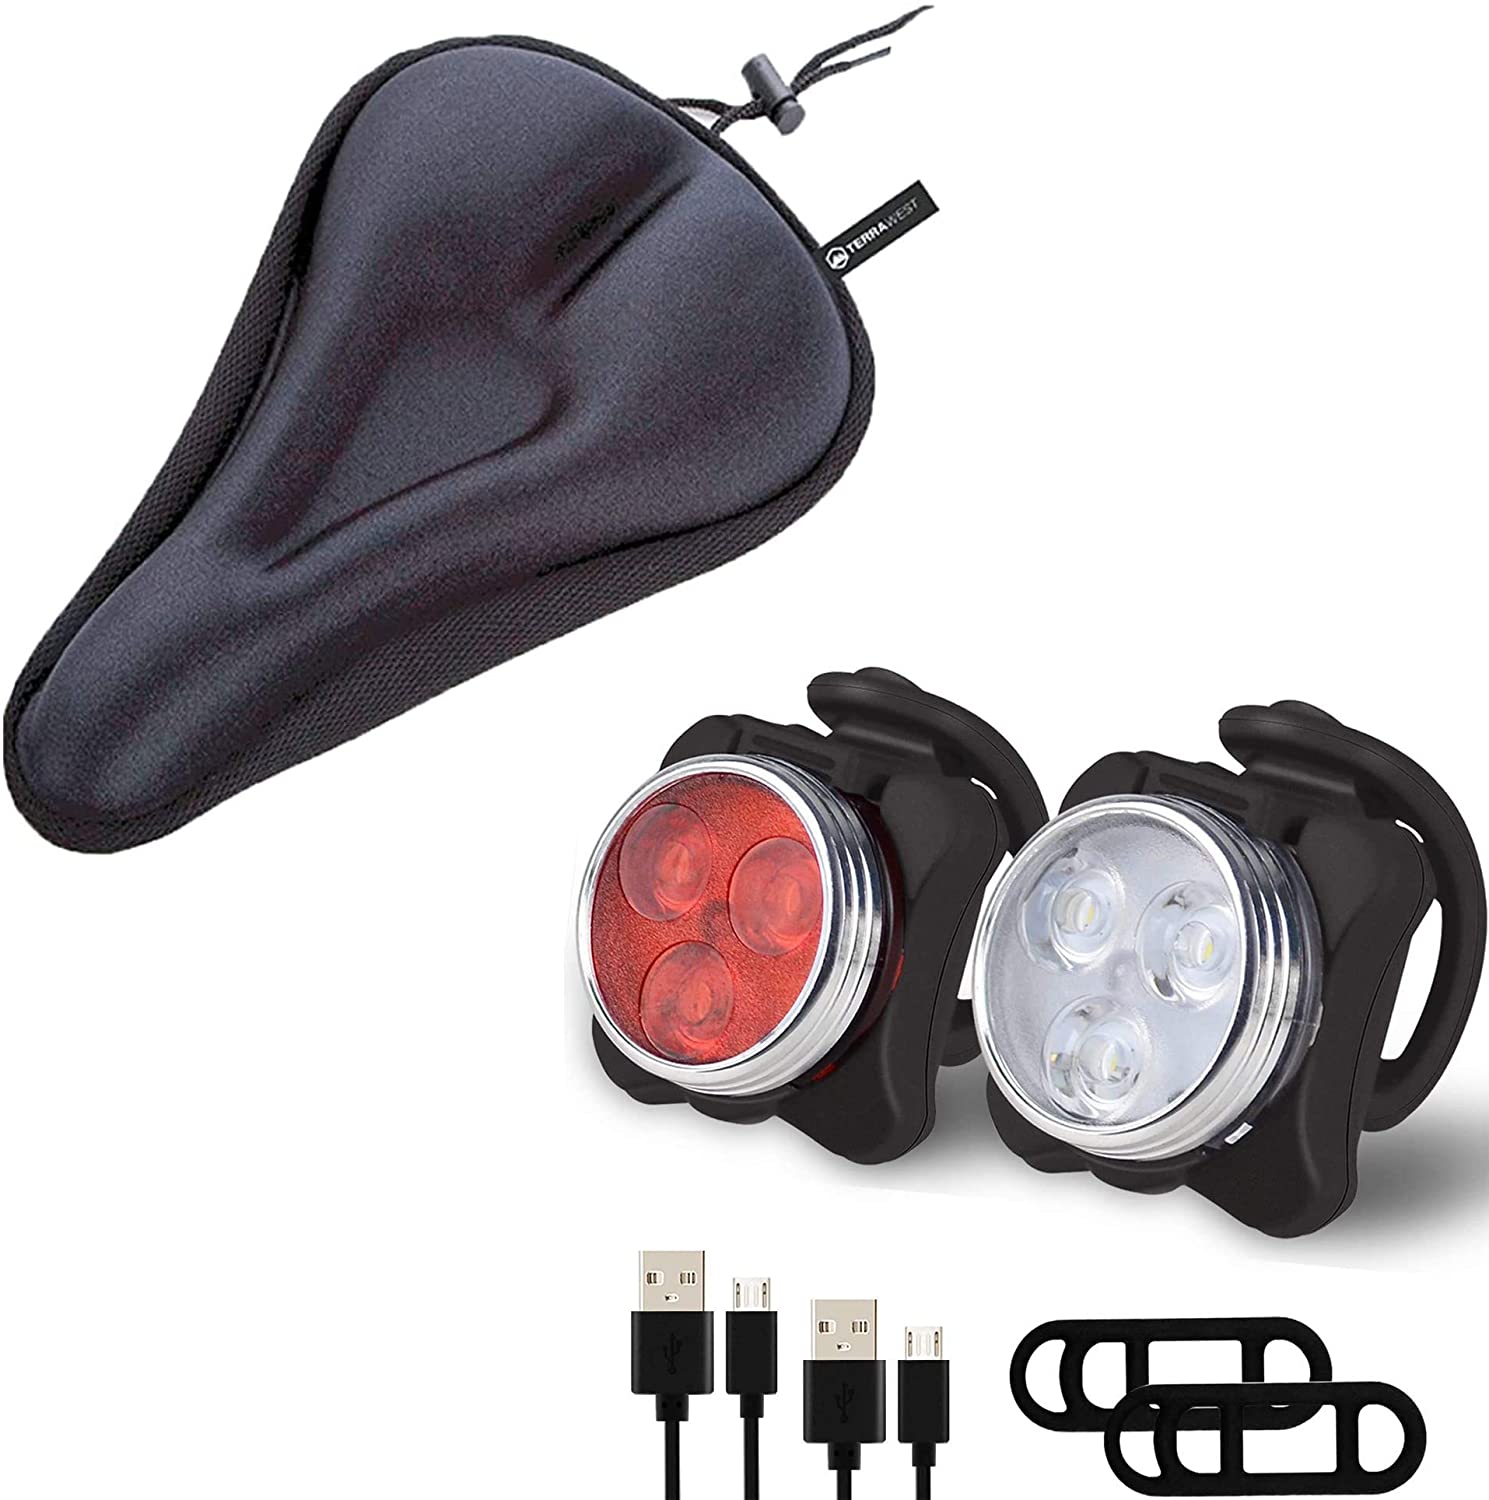 TerraWest Rechargeable LED Bike Lights & Saddle Cushion Seat Cover Set